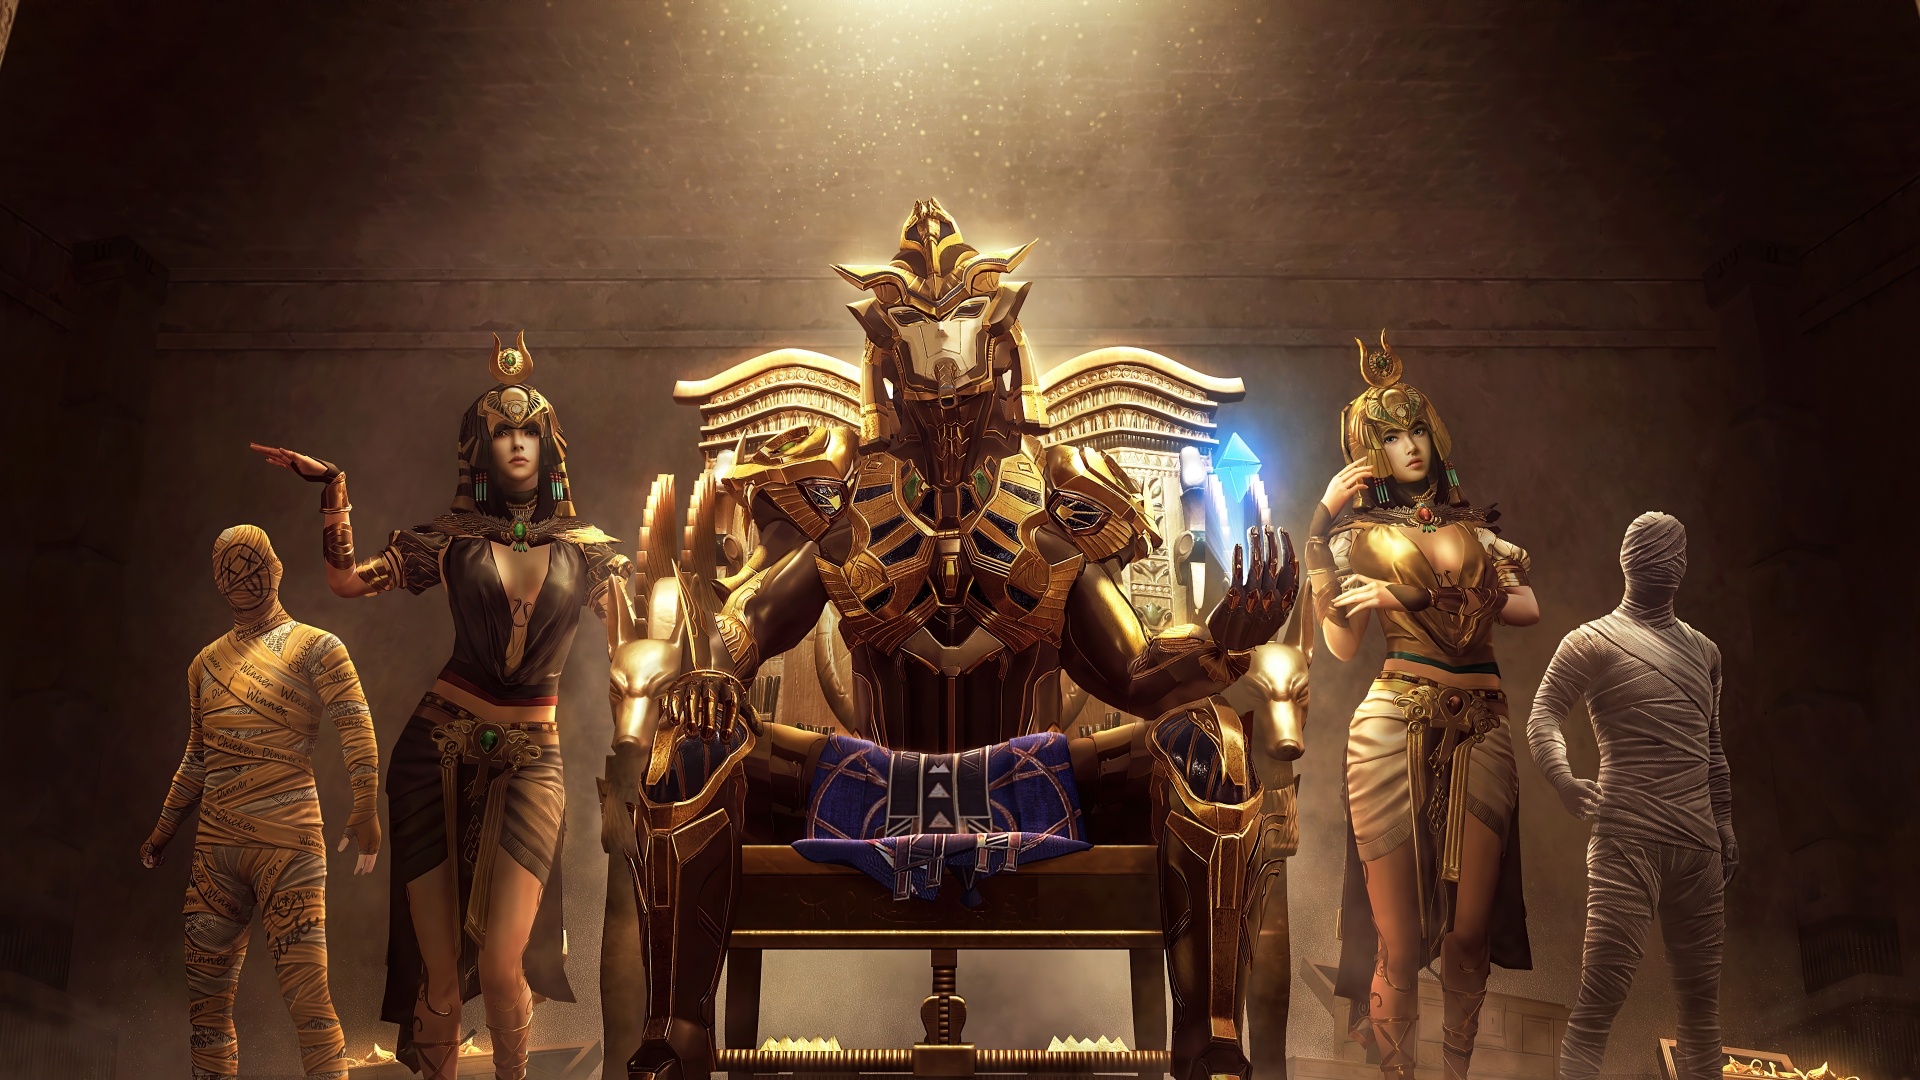 Golden Pharaoh from PUBG Wallpaper 4k Ultra HD ID:6118